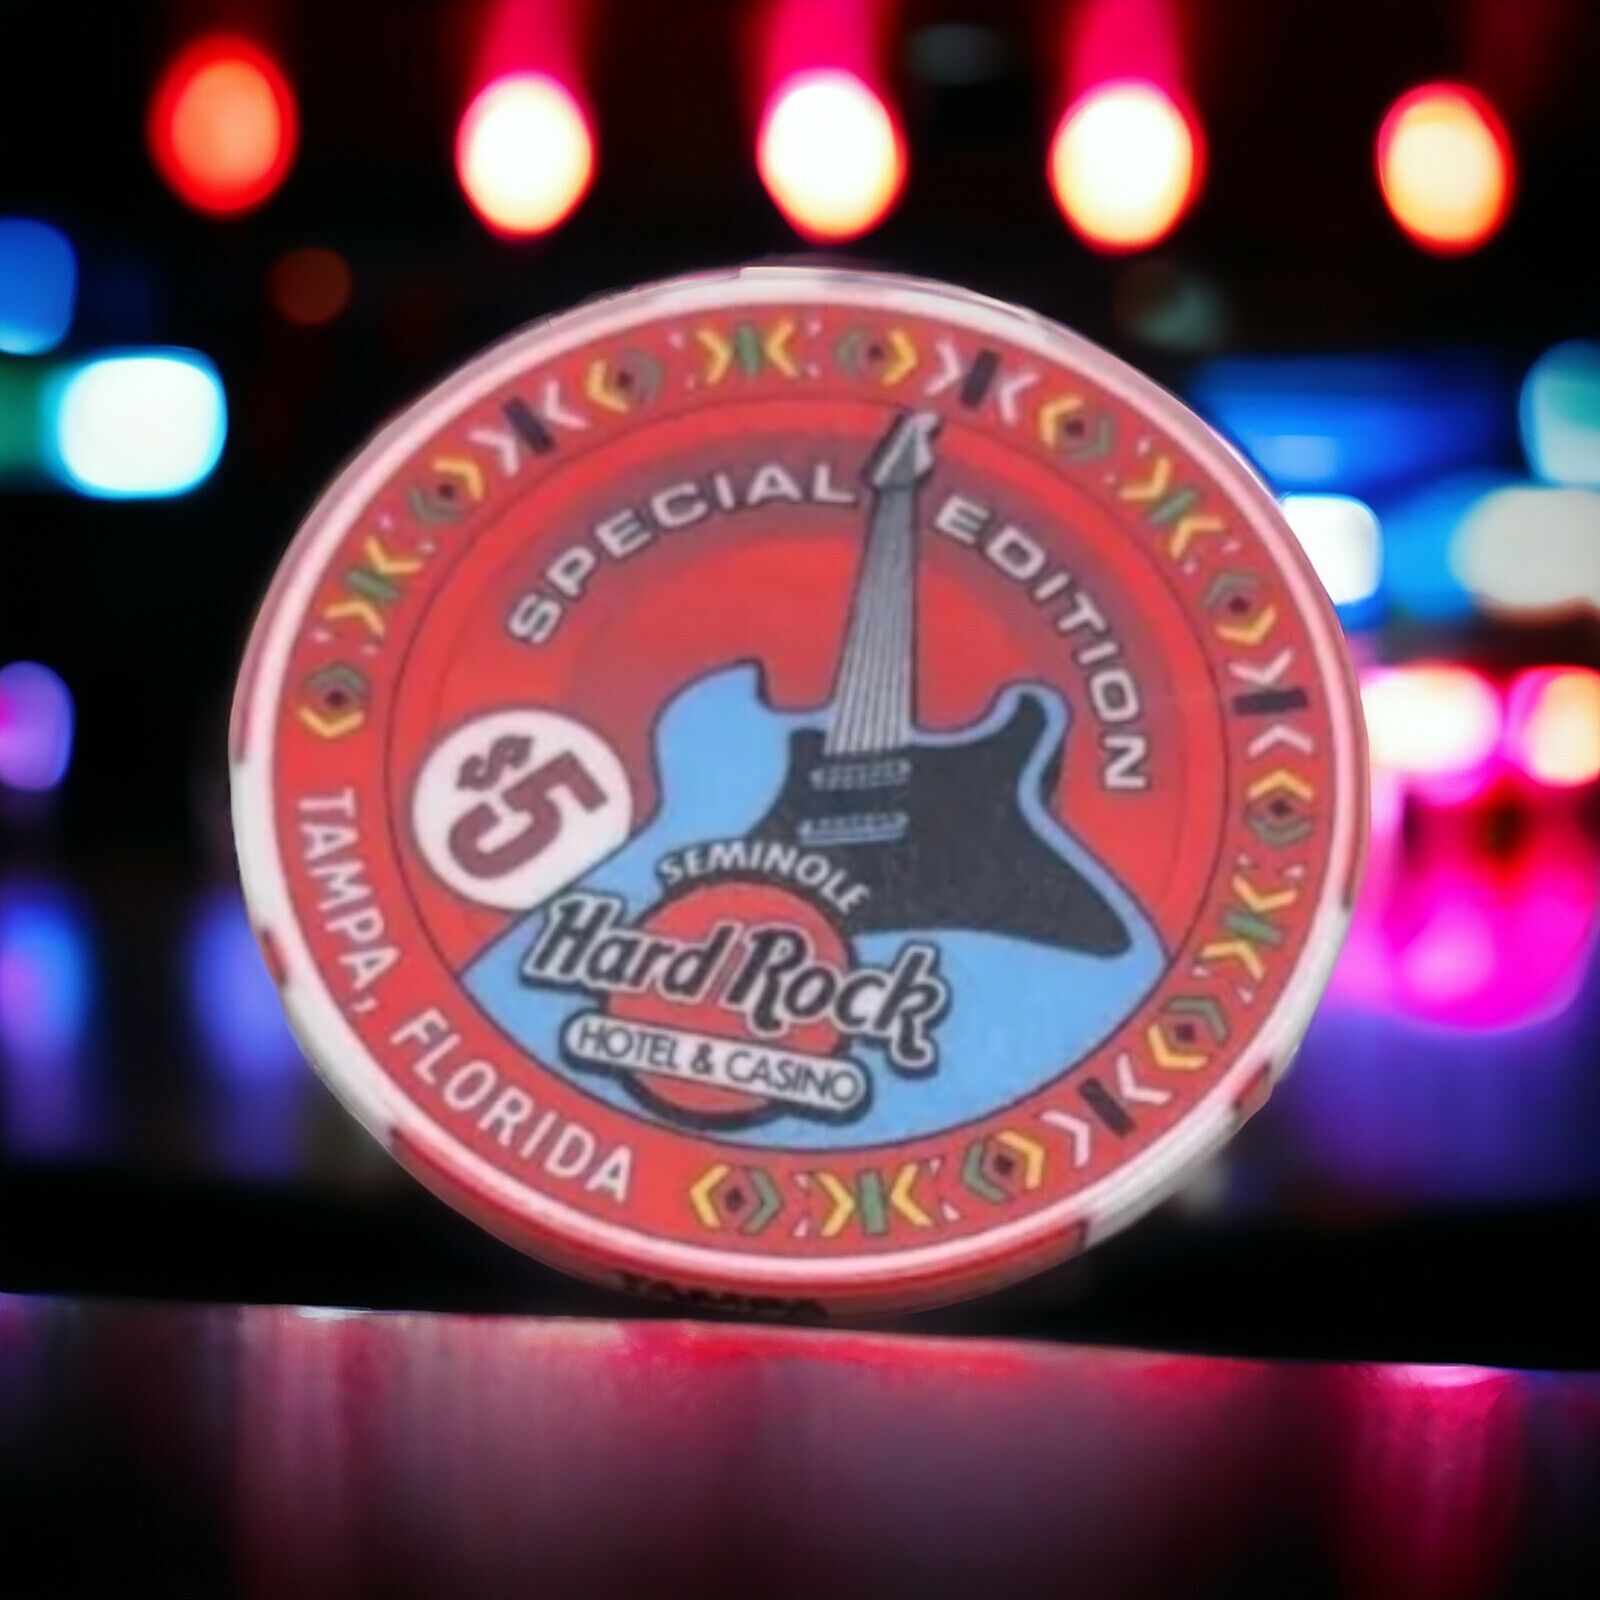 Hard Rock Hotel & Casino Special Edition Seminole Tribe $5 Red Casino Chip